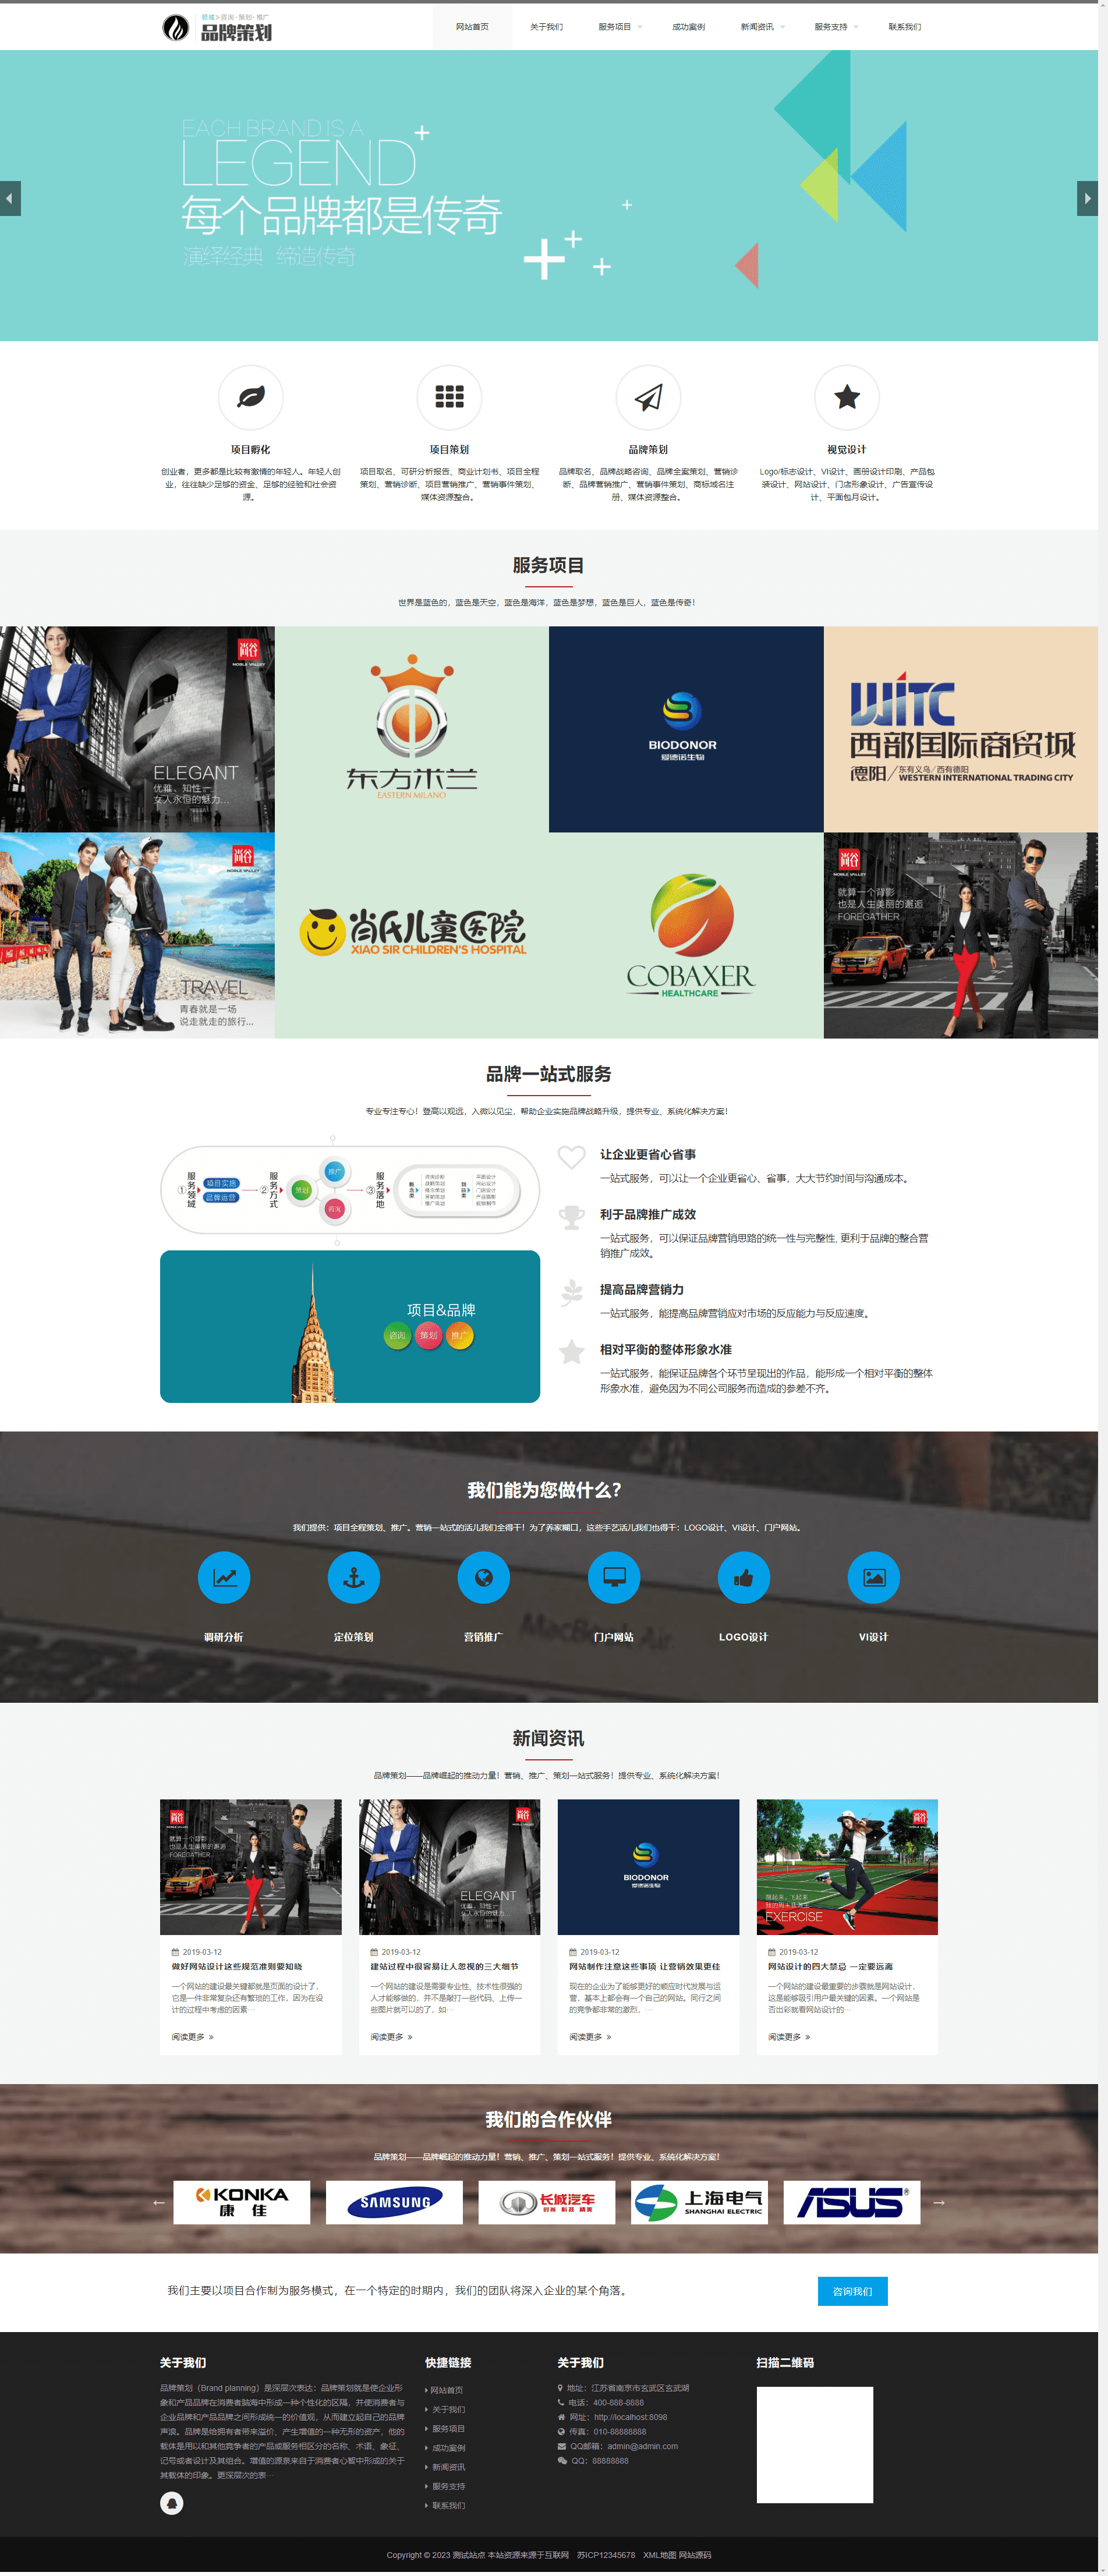 Pbootcms响应式品牌广告策划网站模板